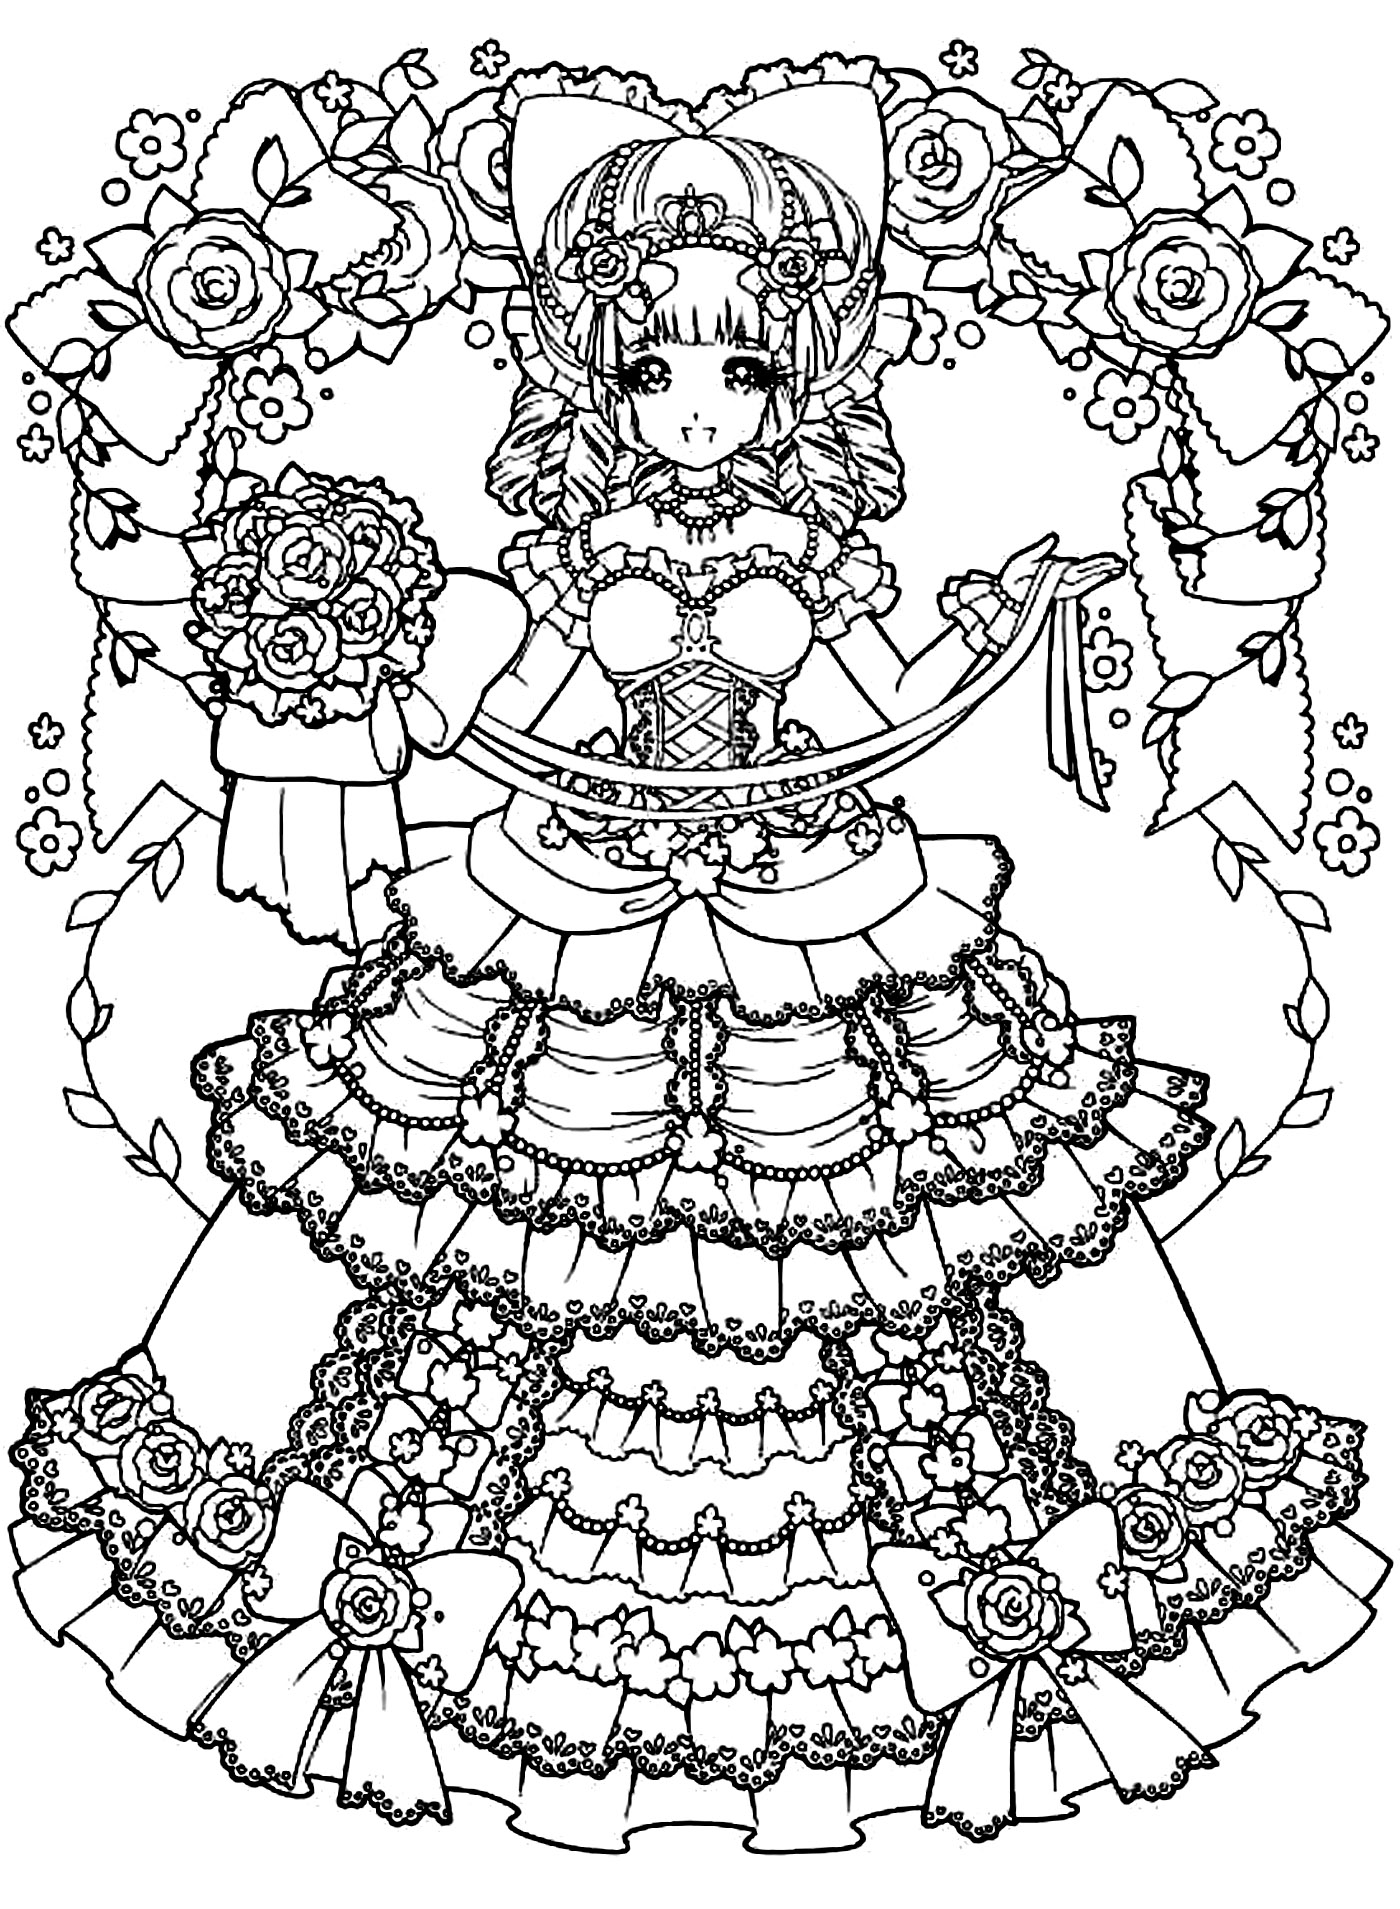 Manga drawing : Girl with beautiful dress